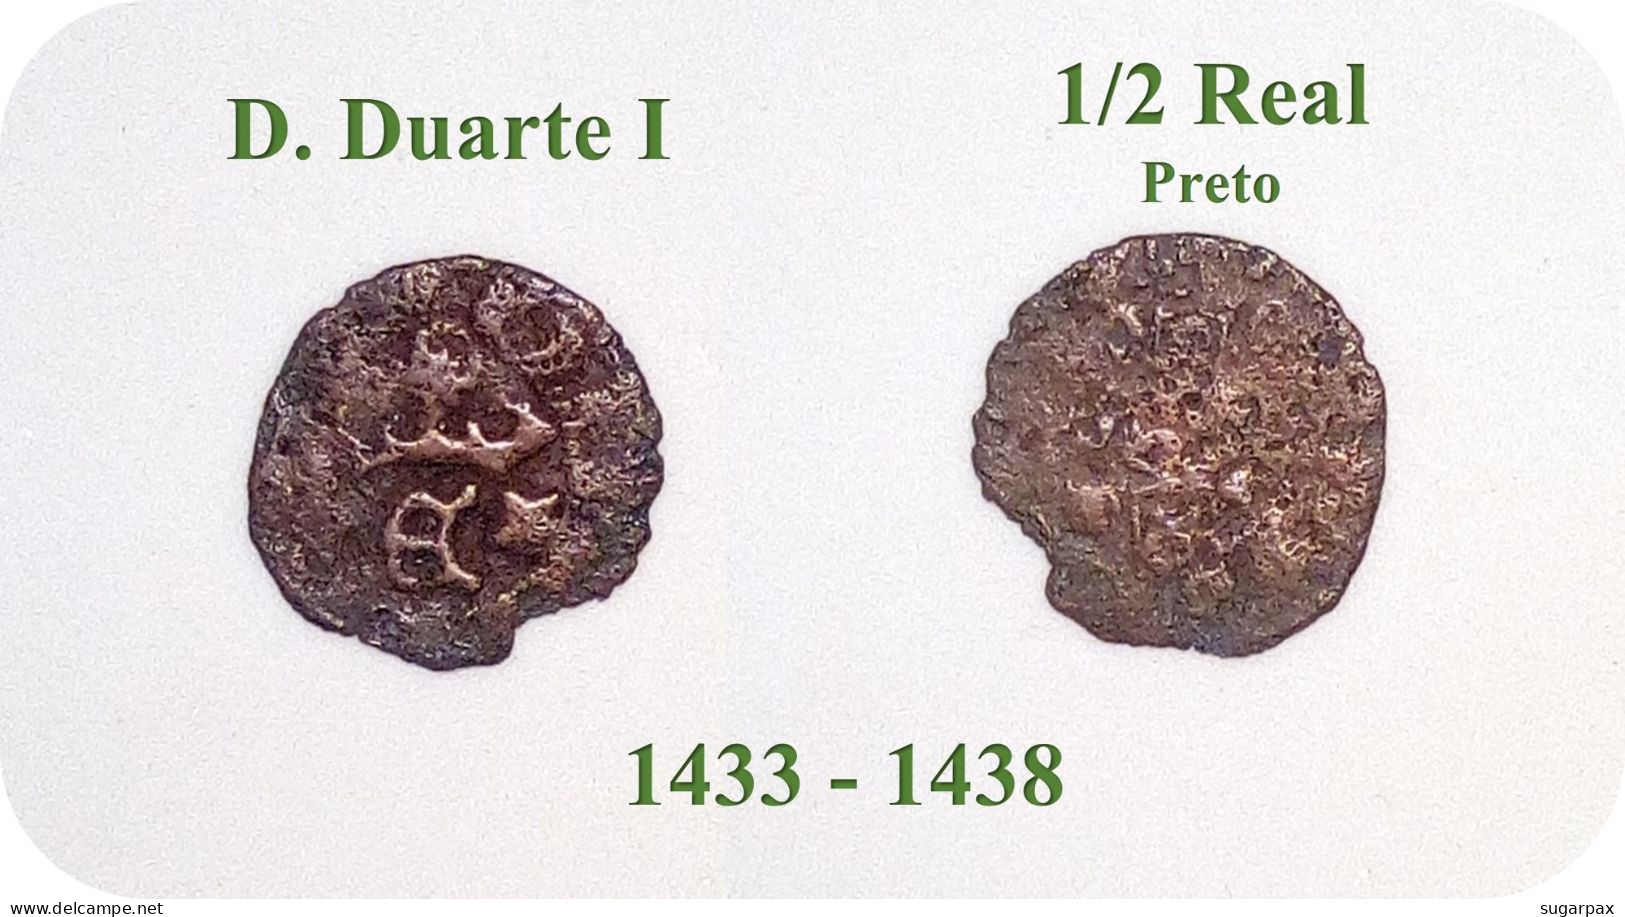 D. DUARTE I - 1/2 Real Preto - N/D ( 1433 - 1438 ) - A.G. 01.02 - Monarquia Portugal - Portugal